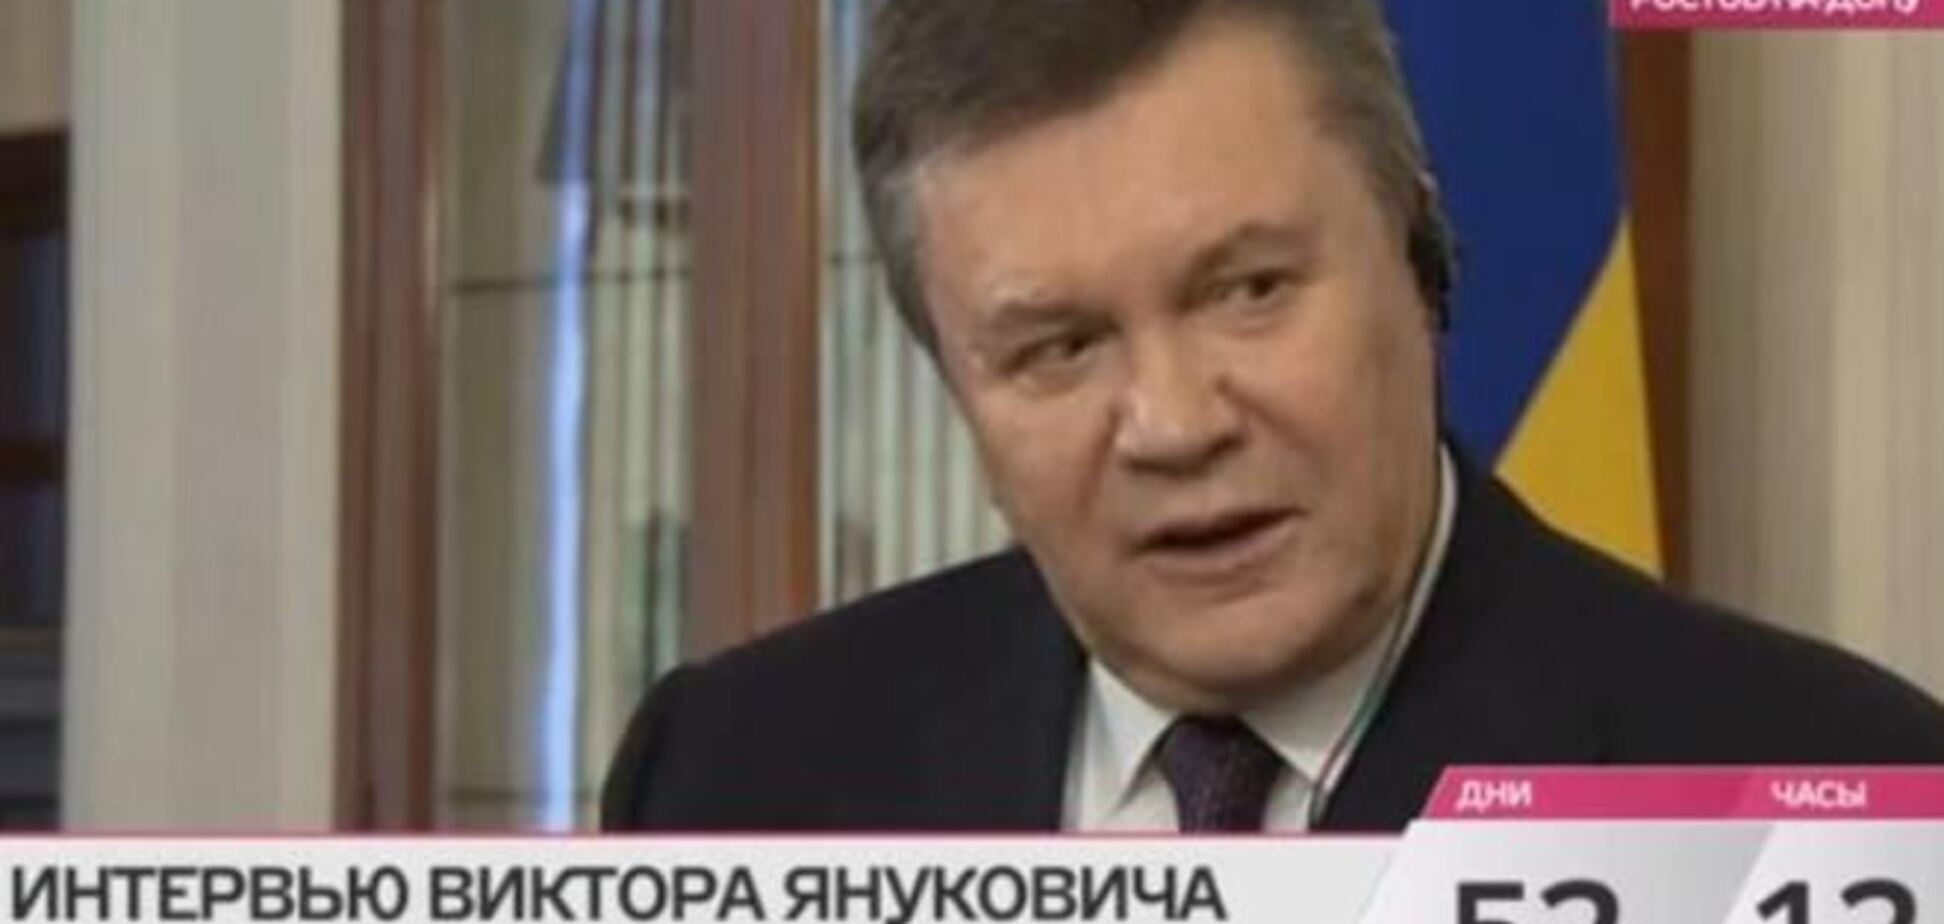 На 'Дожде' не знают, откуда Янукович давал интервью